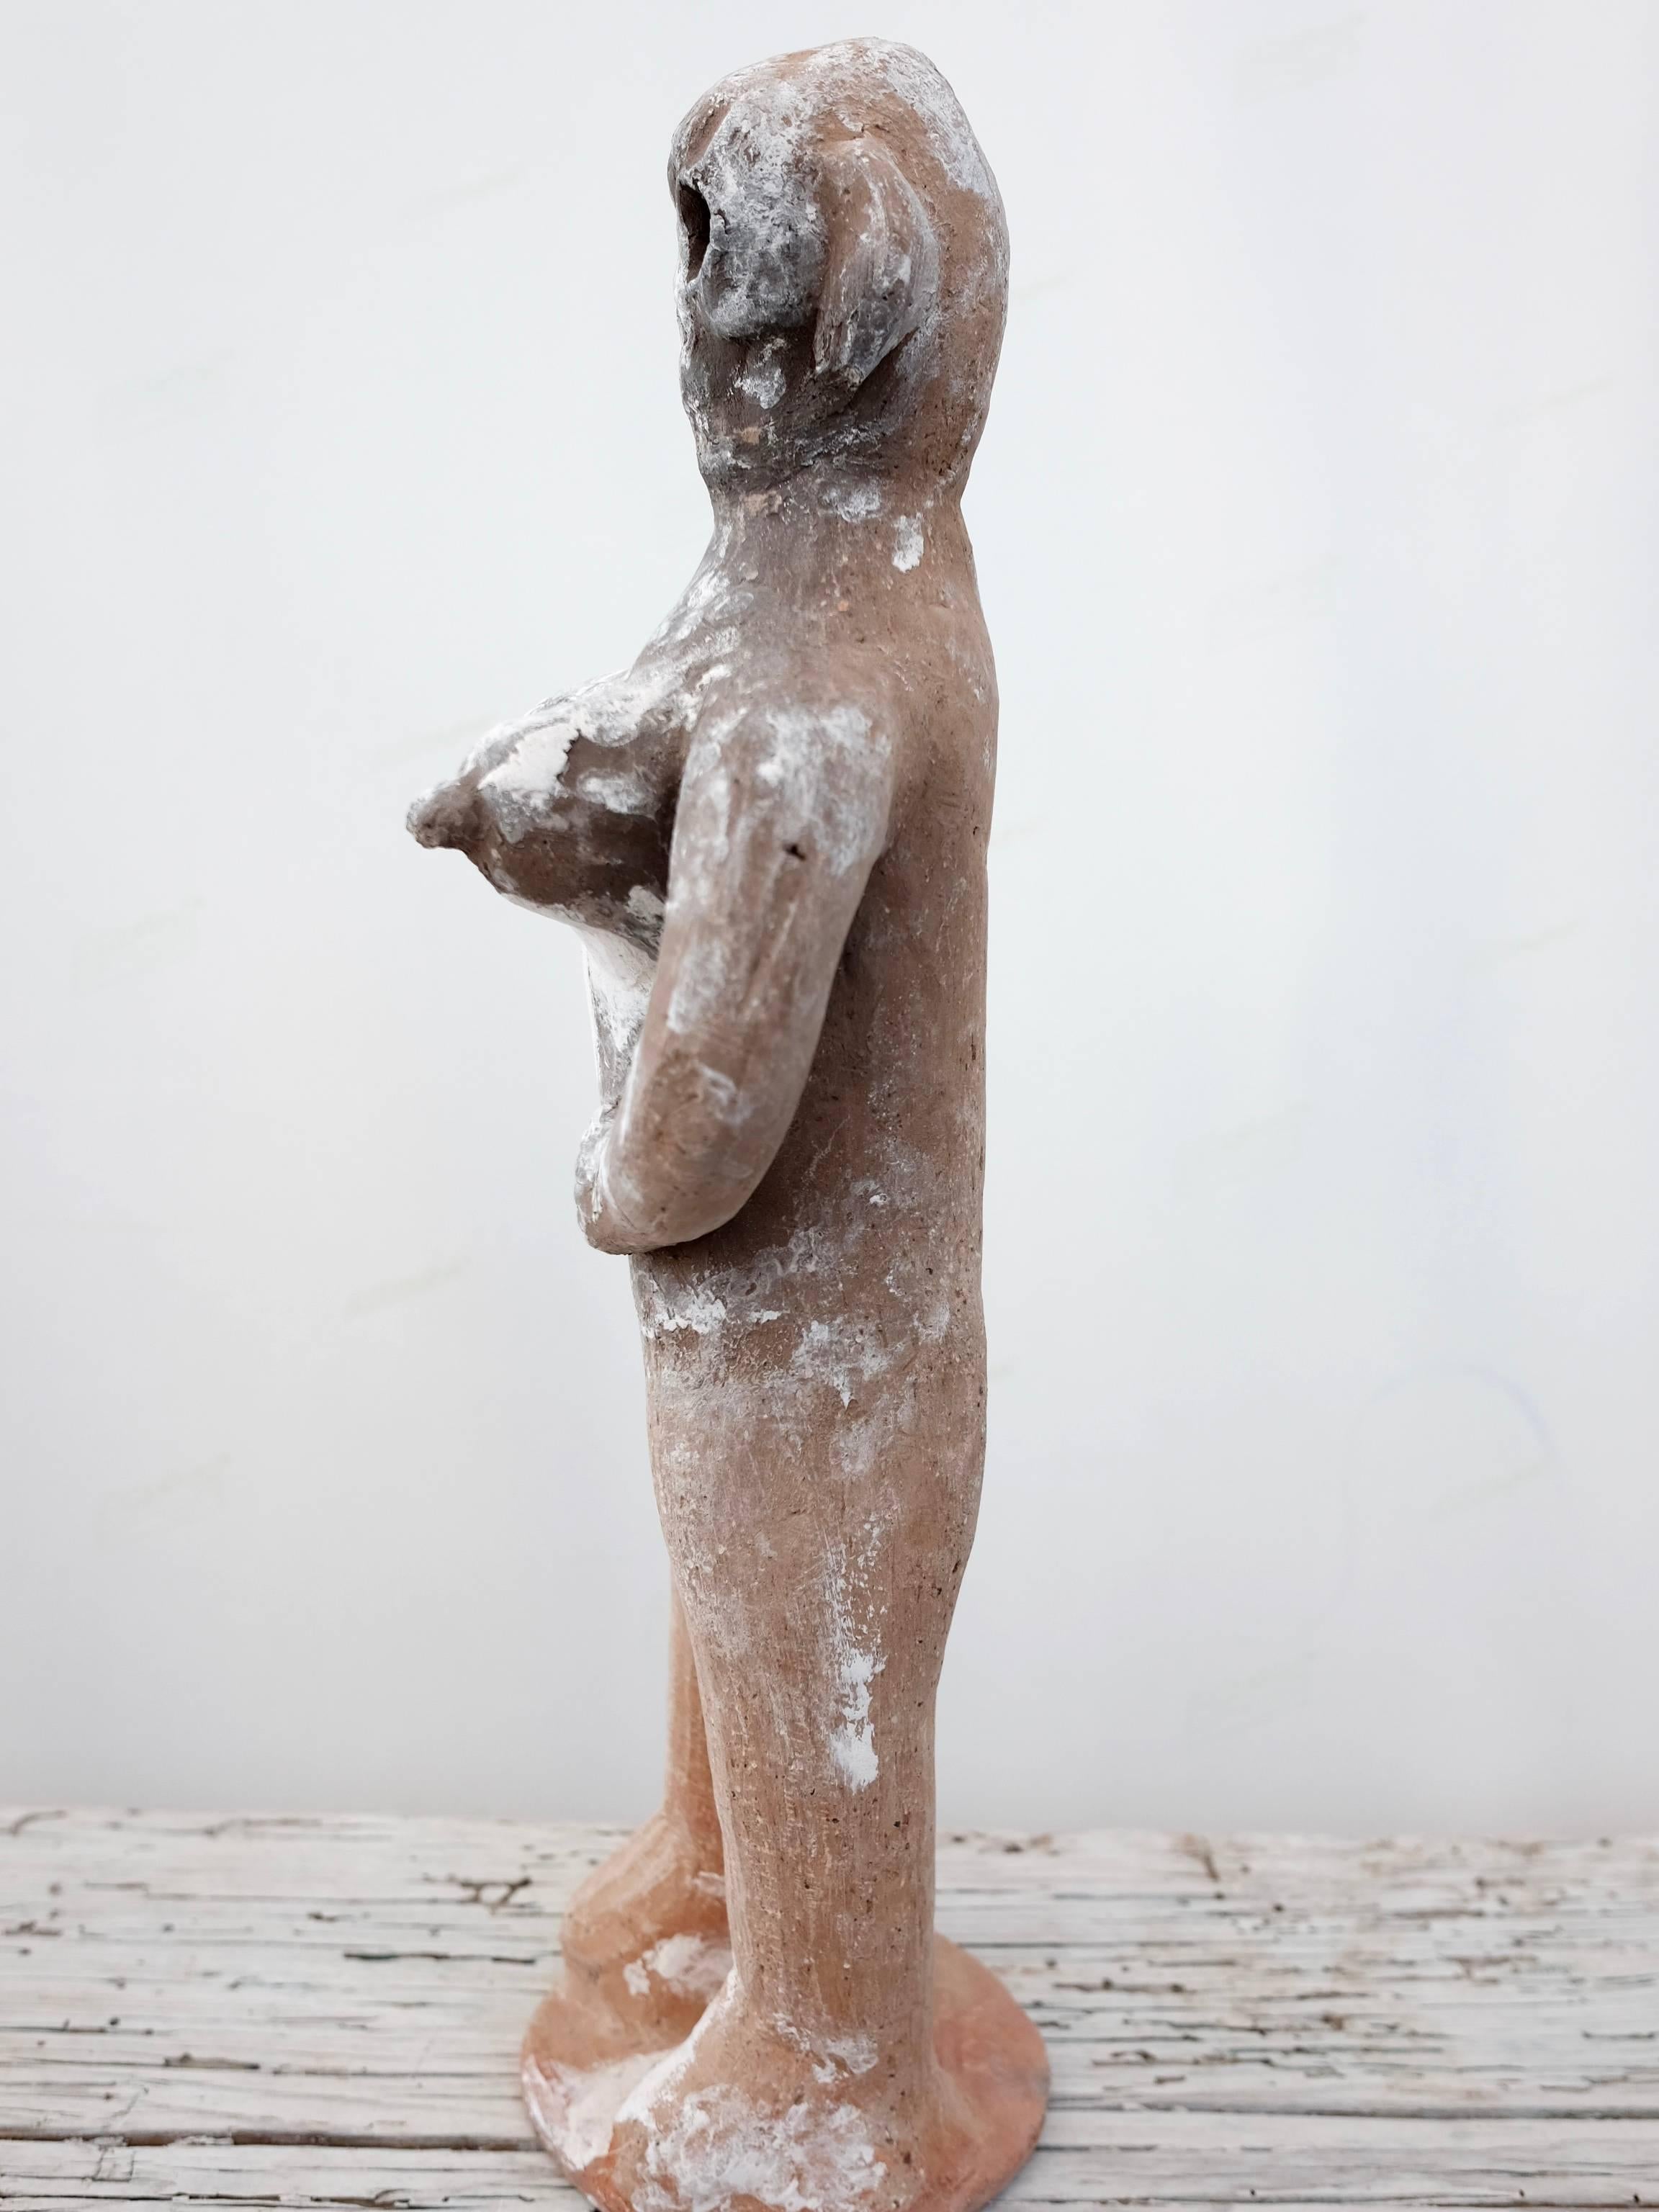 Mexican Contemporary Clay Sculpture by Serapio Medrano from Jalisco, Mexico